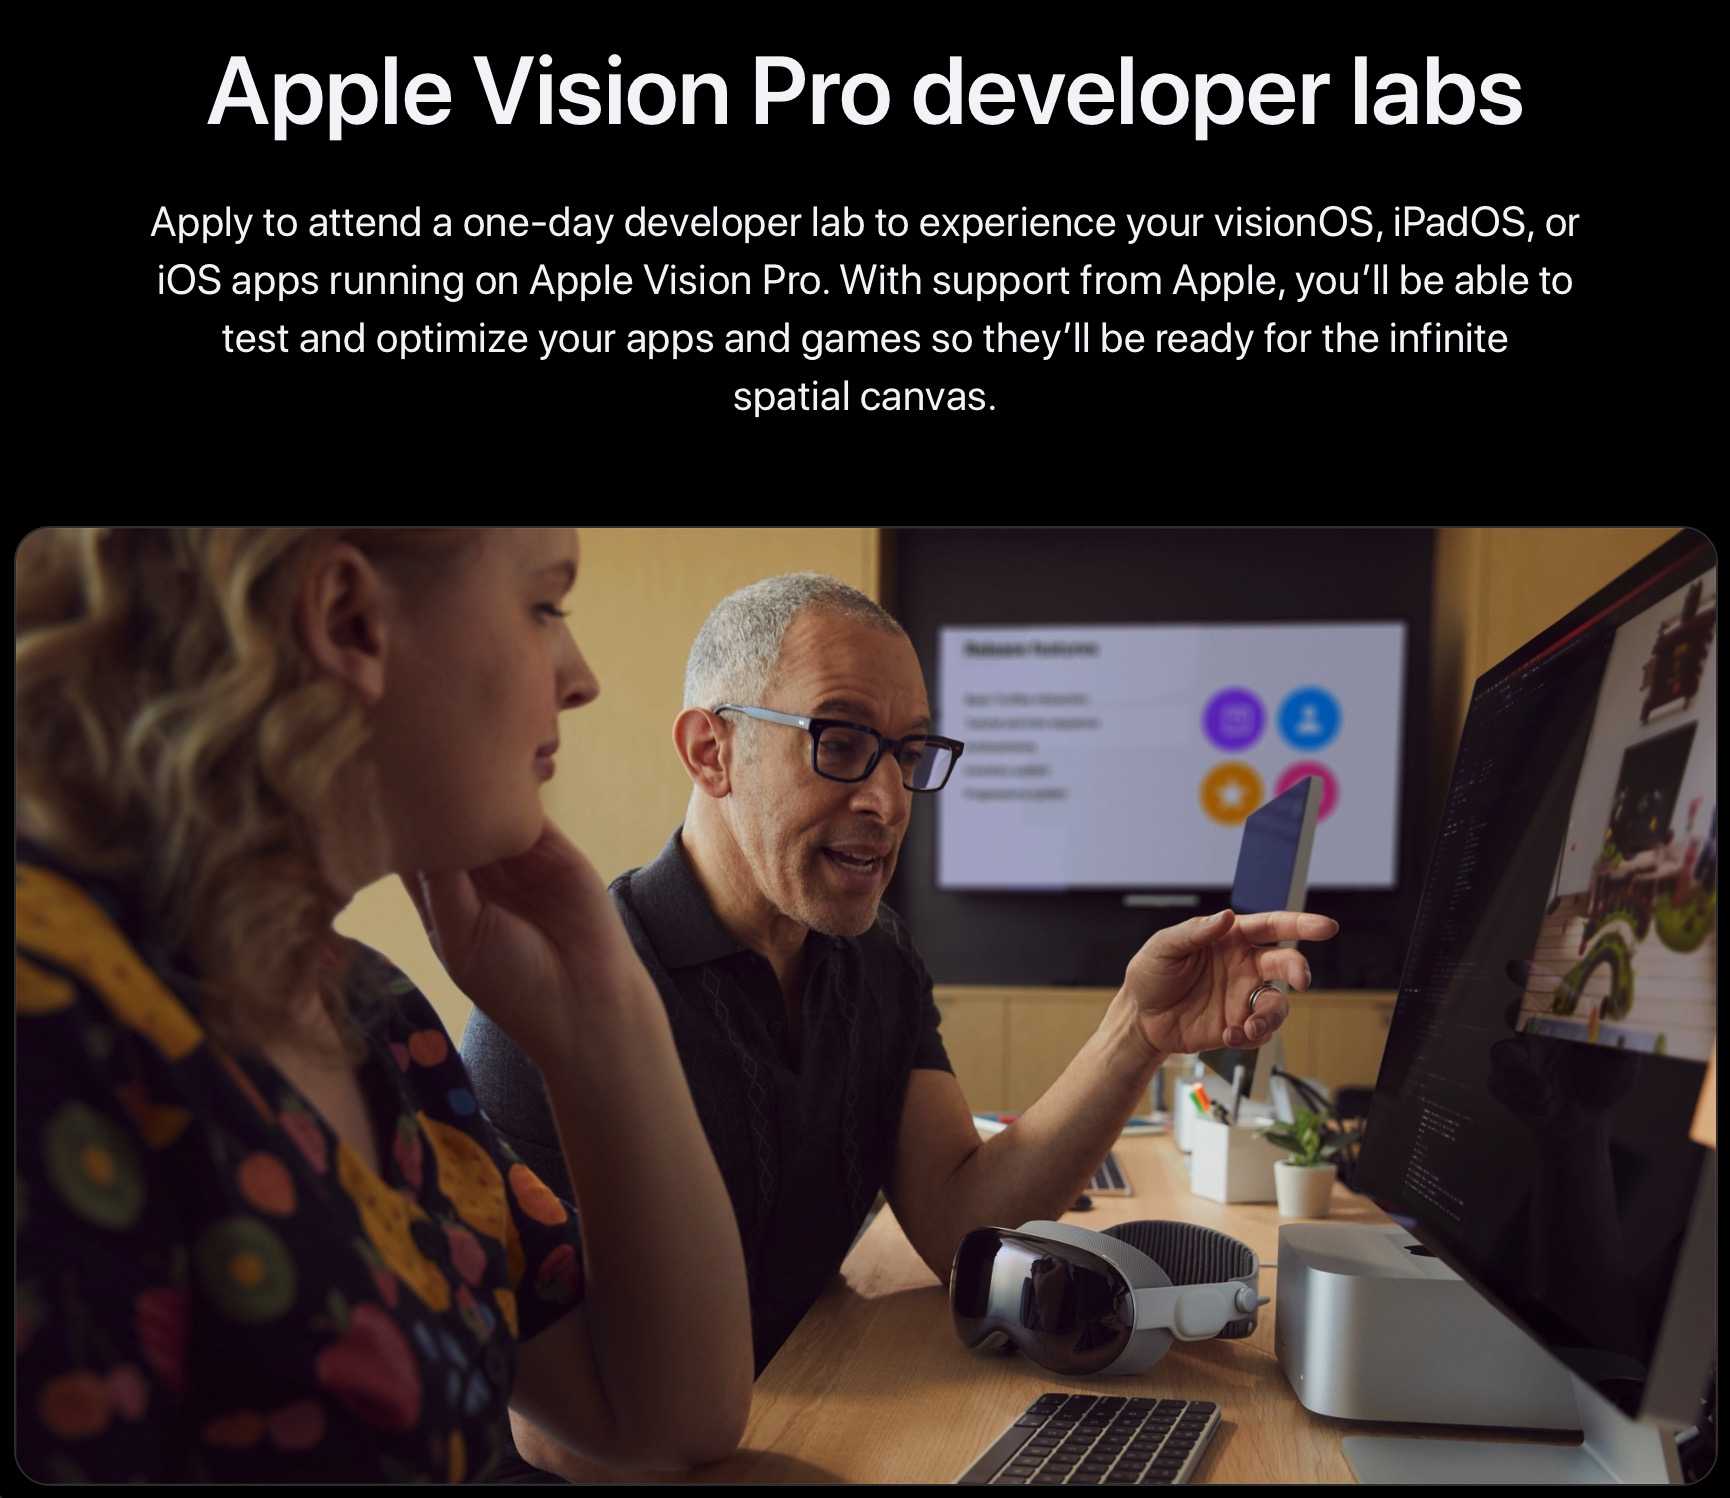 Description of Apple's Vision Pro Developer Labs